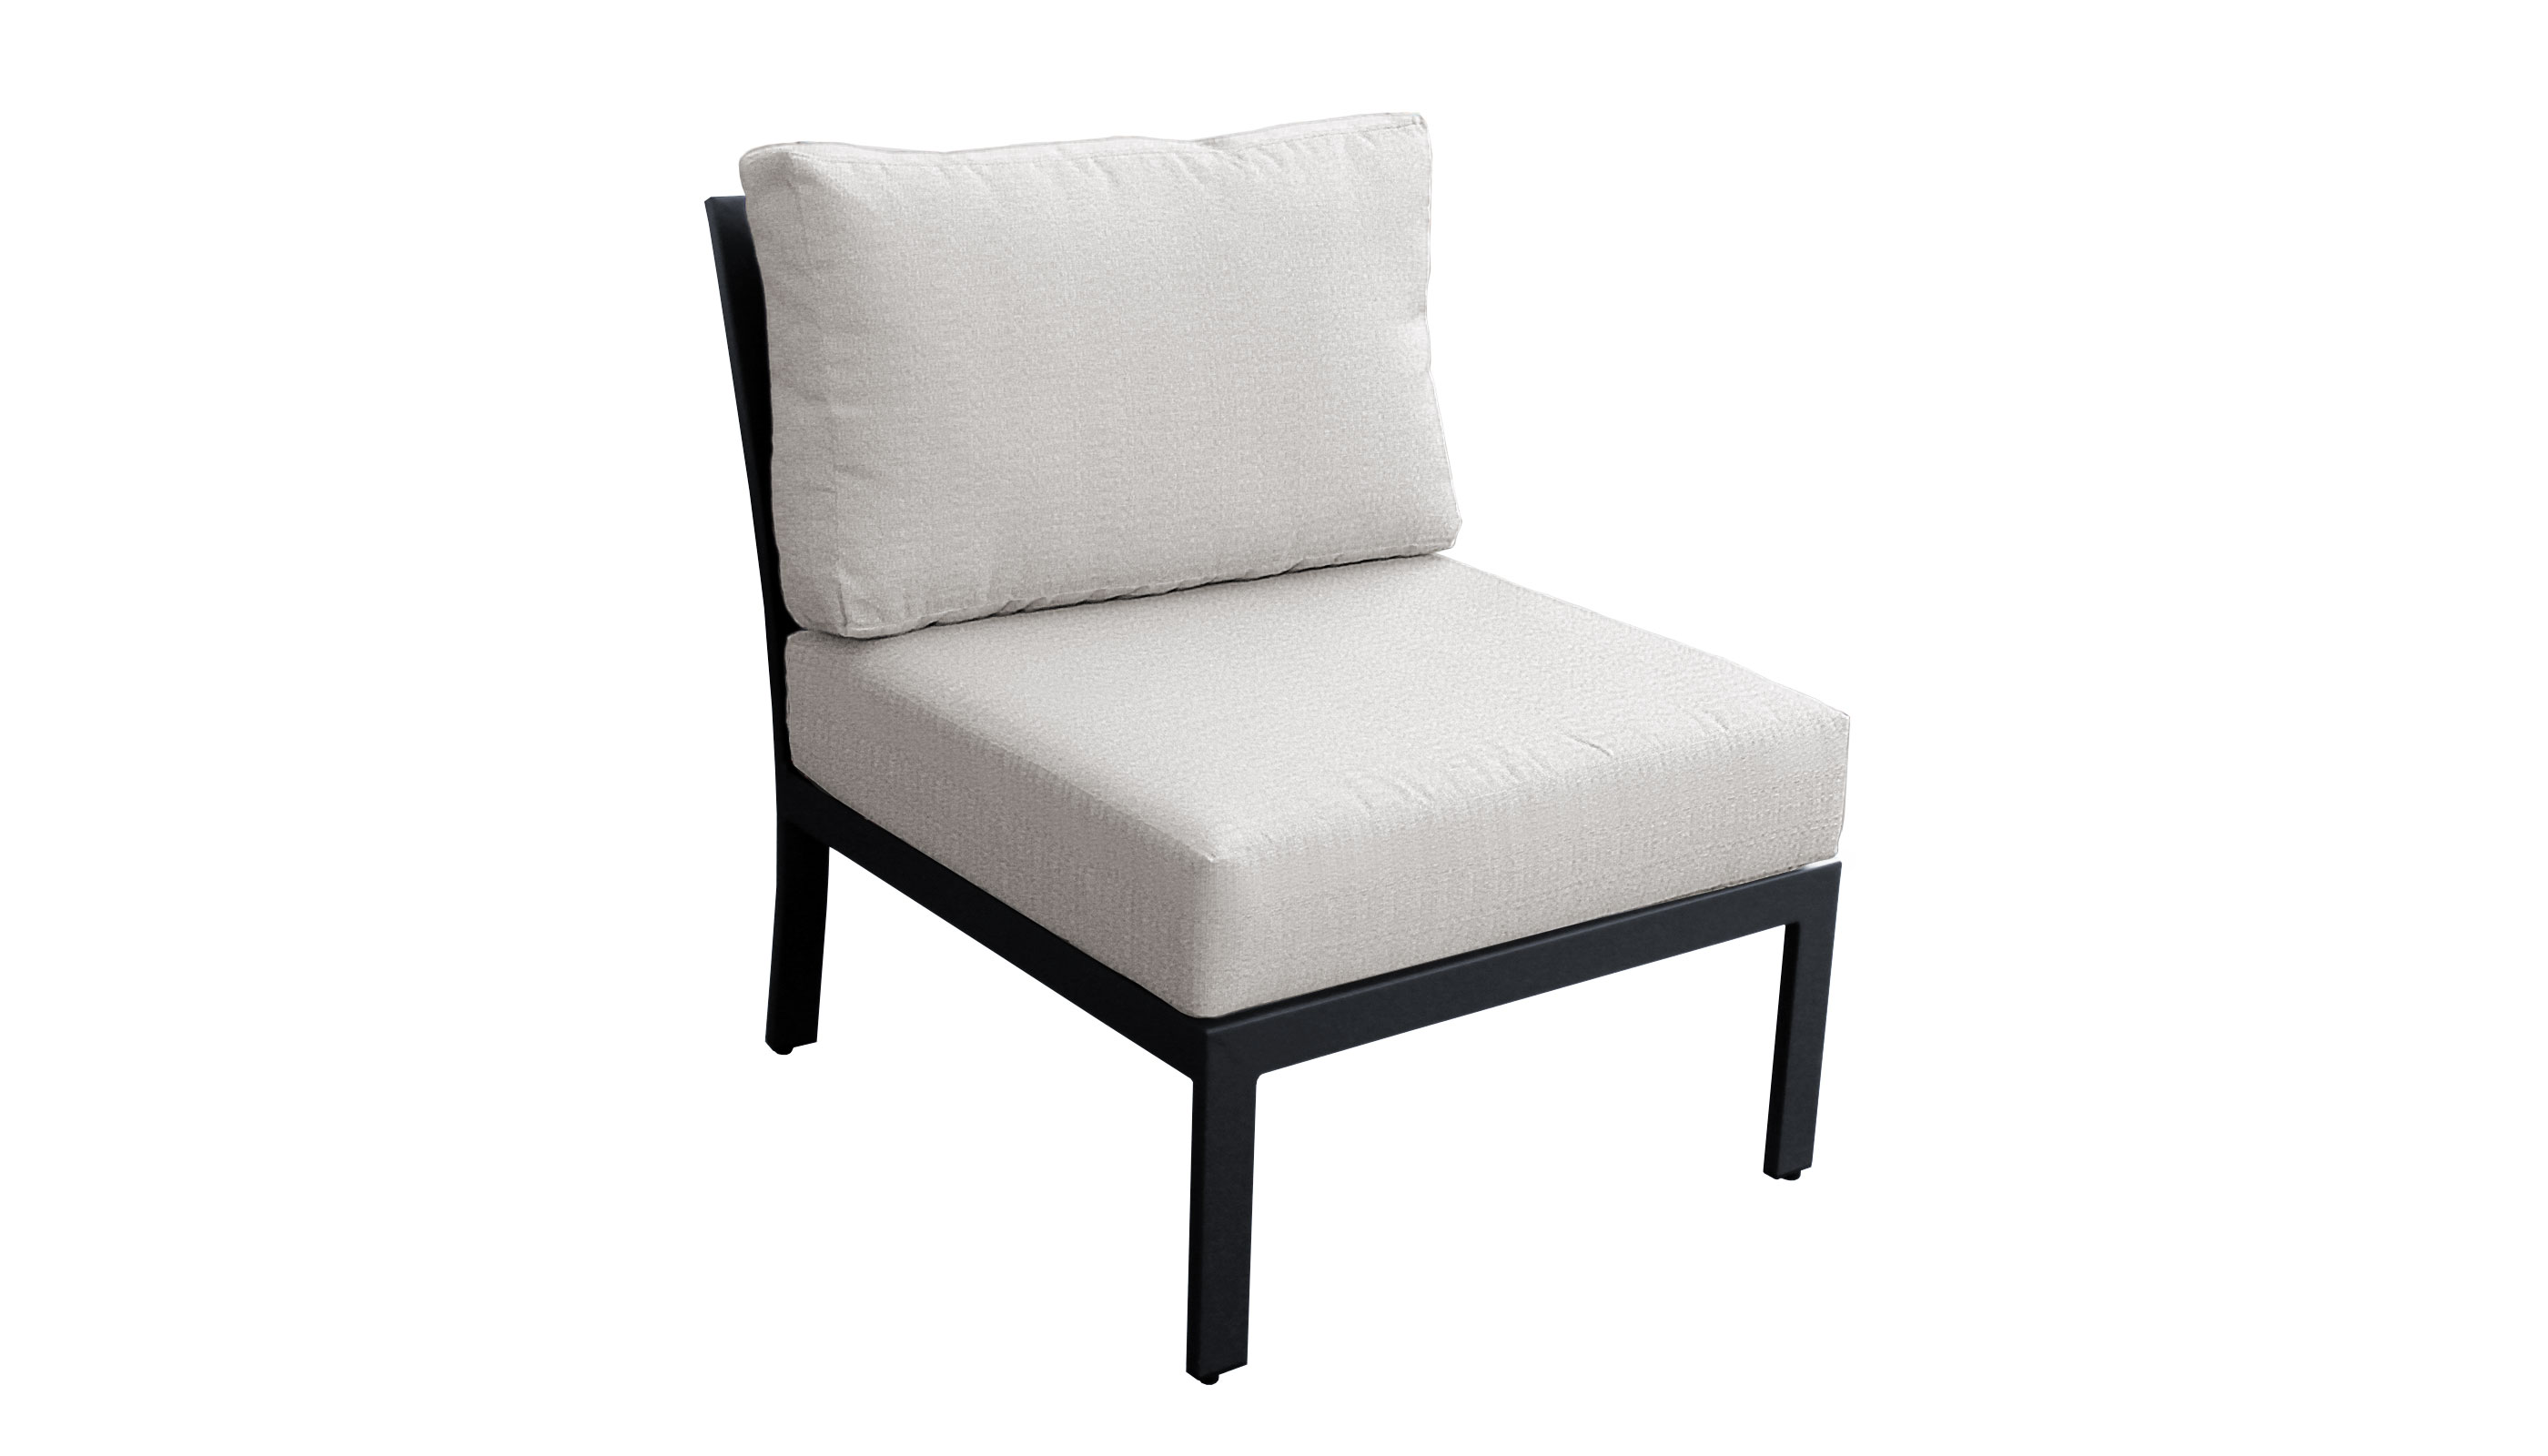 Lexington 5 Piece Outdoor Aluminum Patio Furniture Set 05a - TK Classics